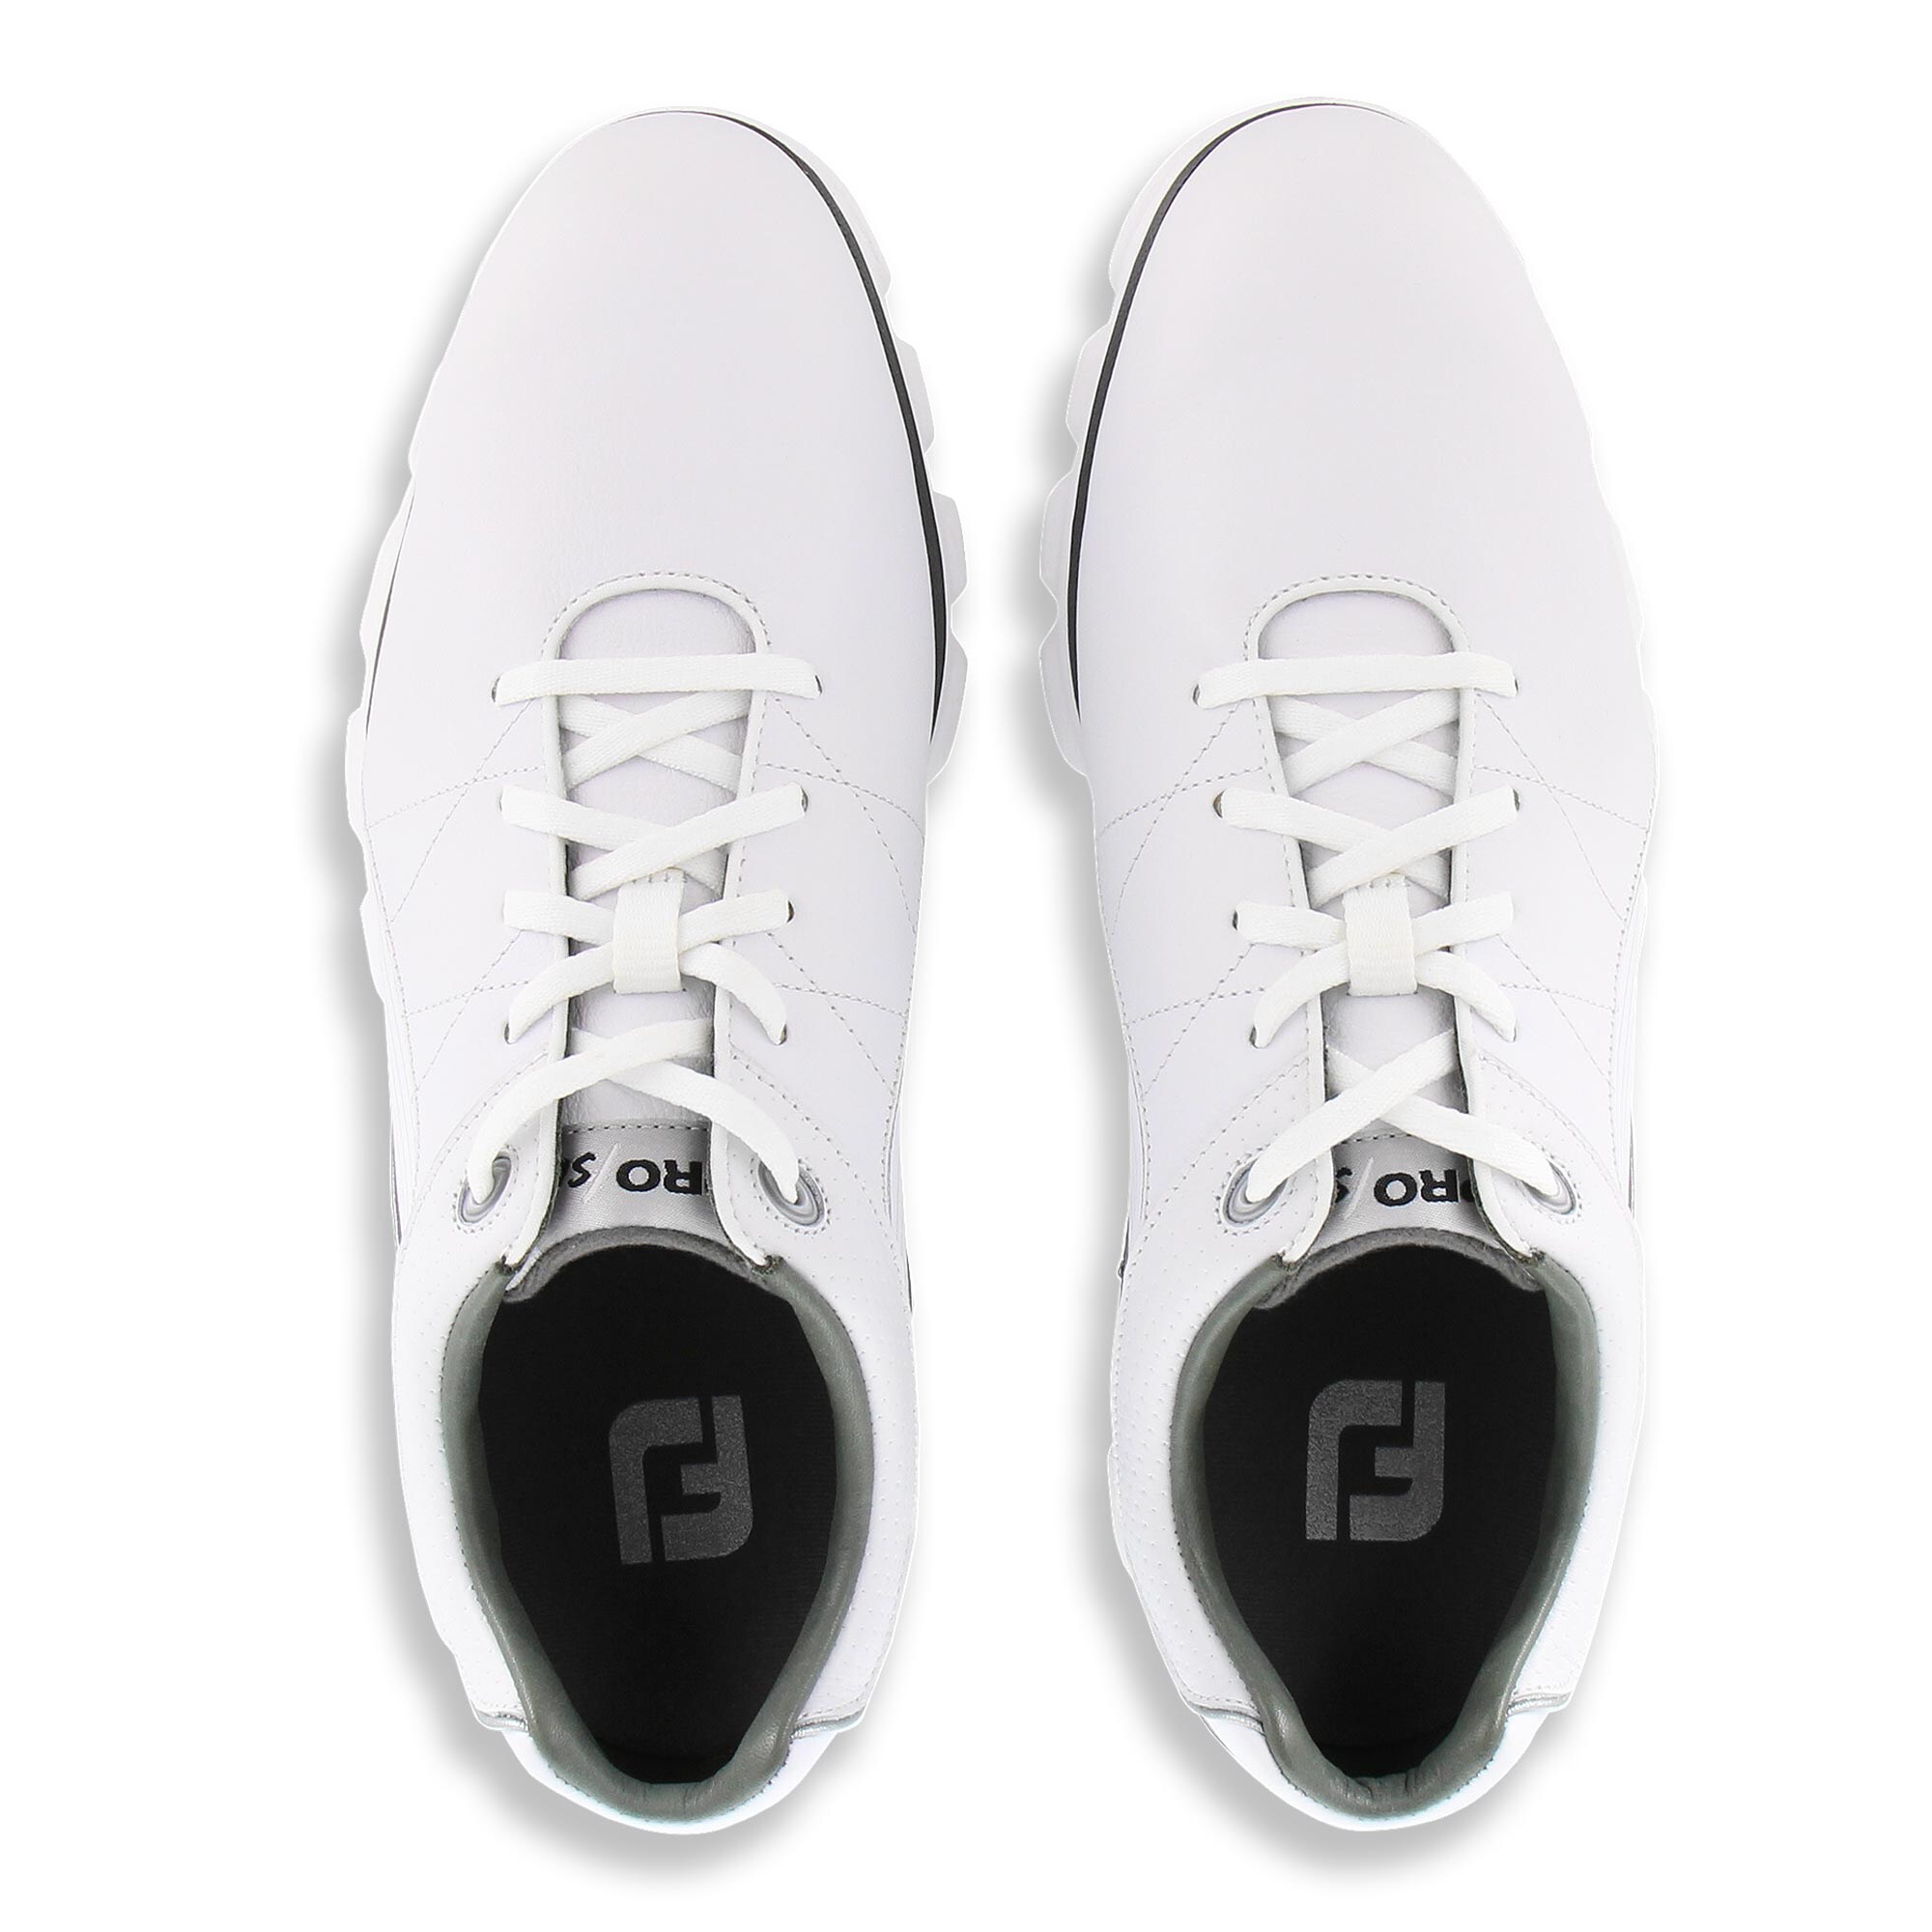 Pro/SL Men's Golf Shoes | FootJoy